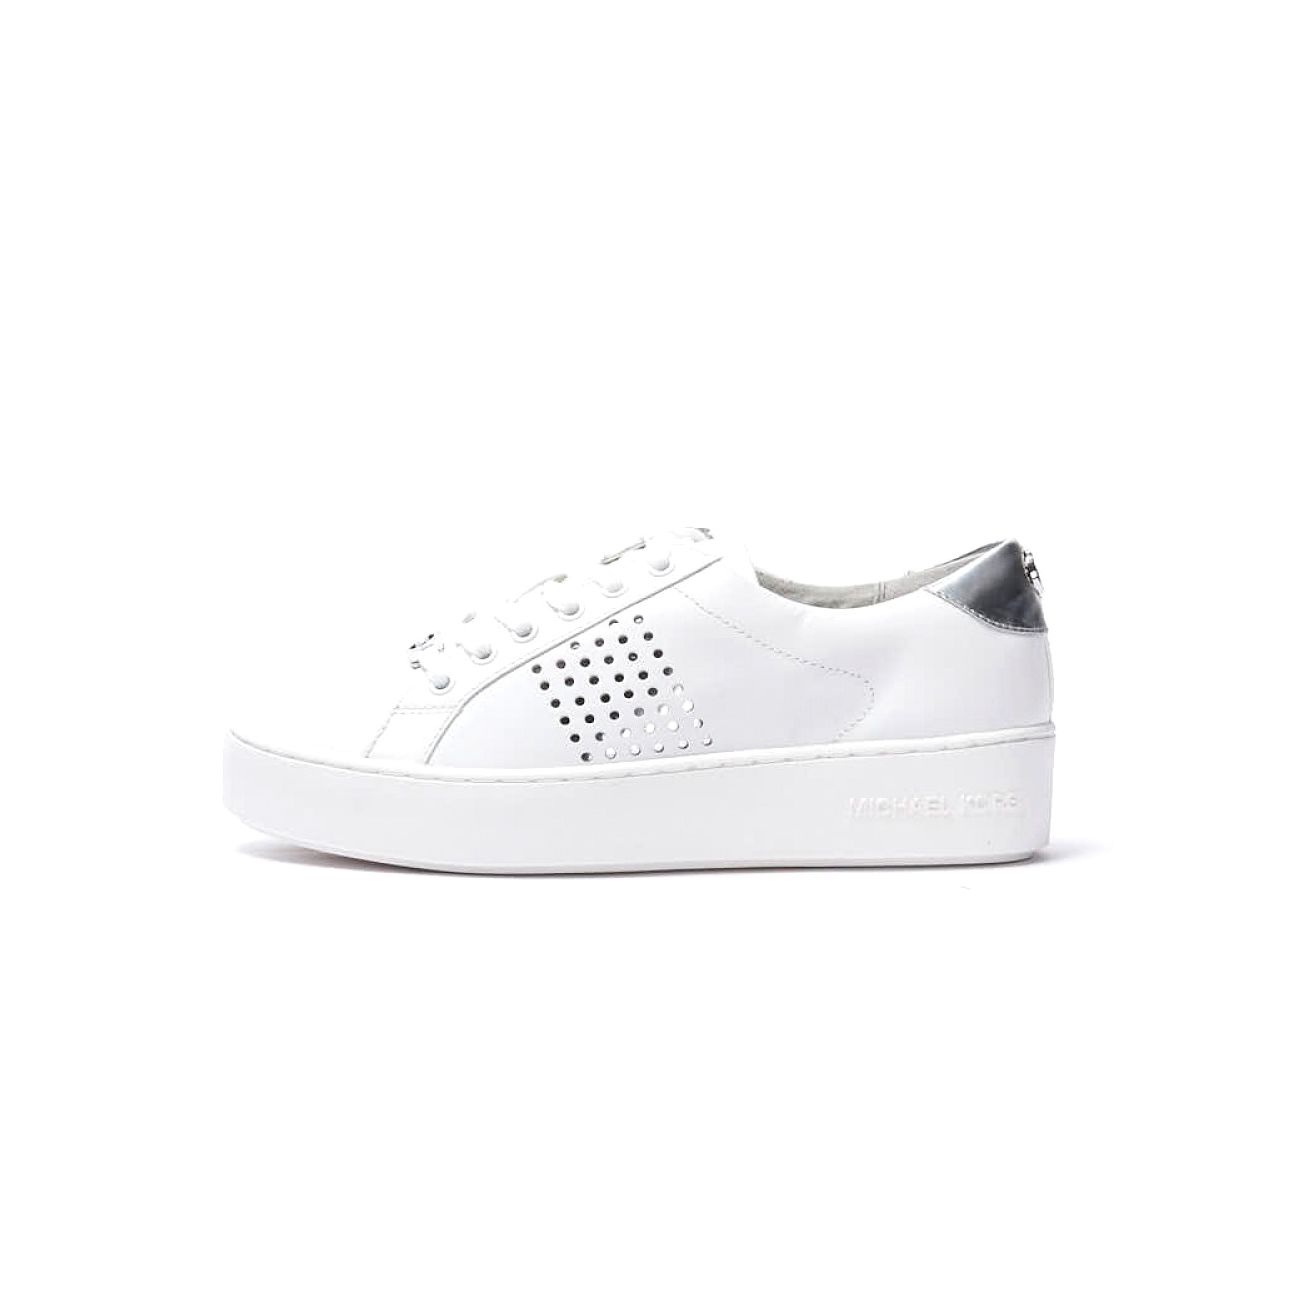 michael kors optic white sneakers